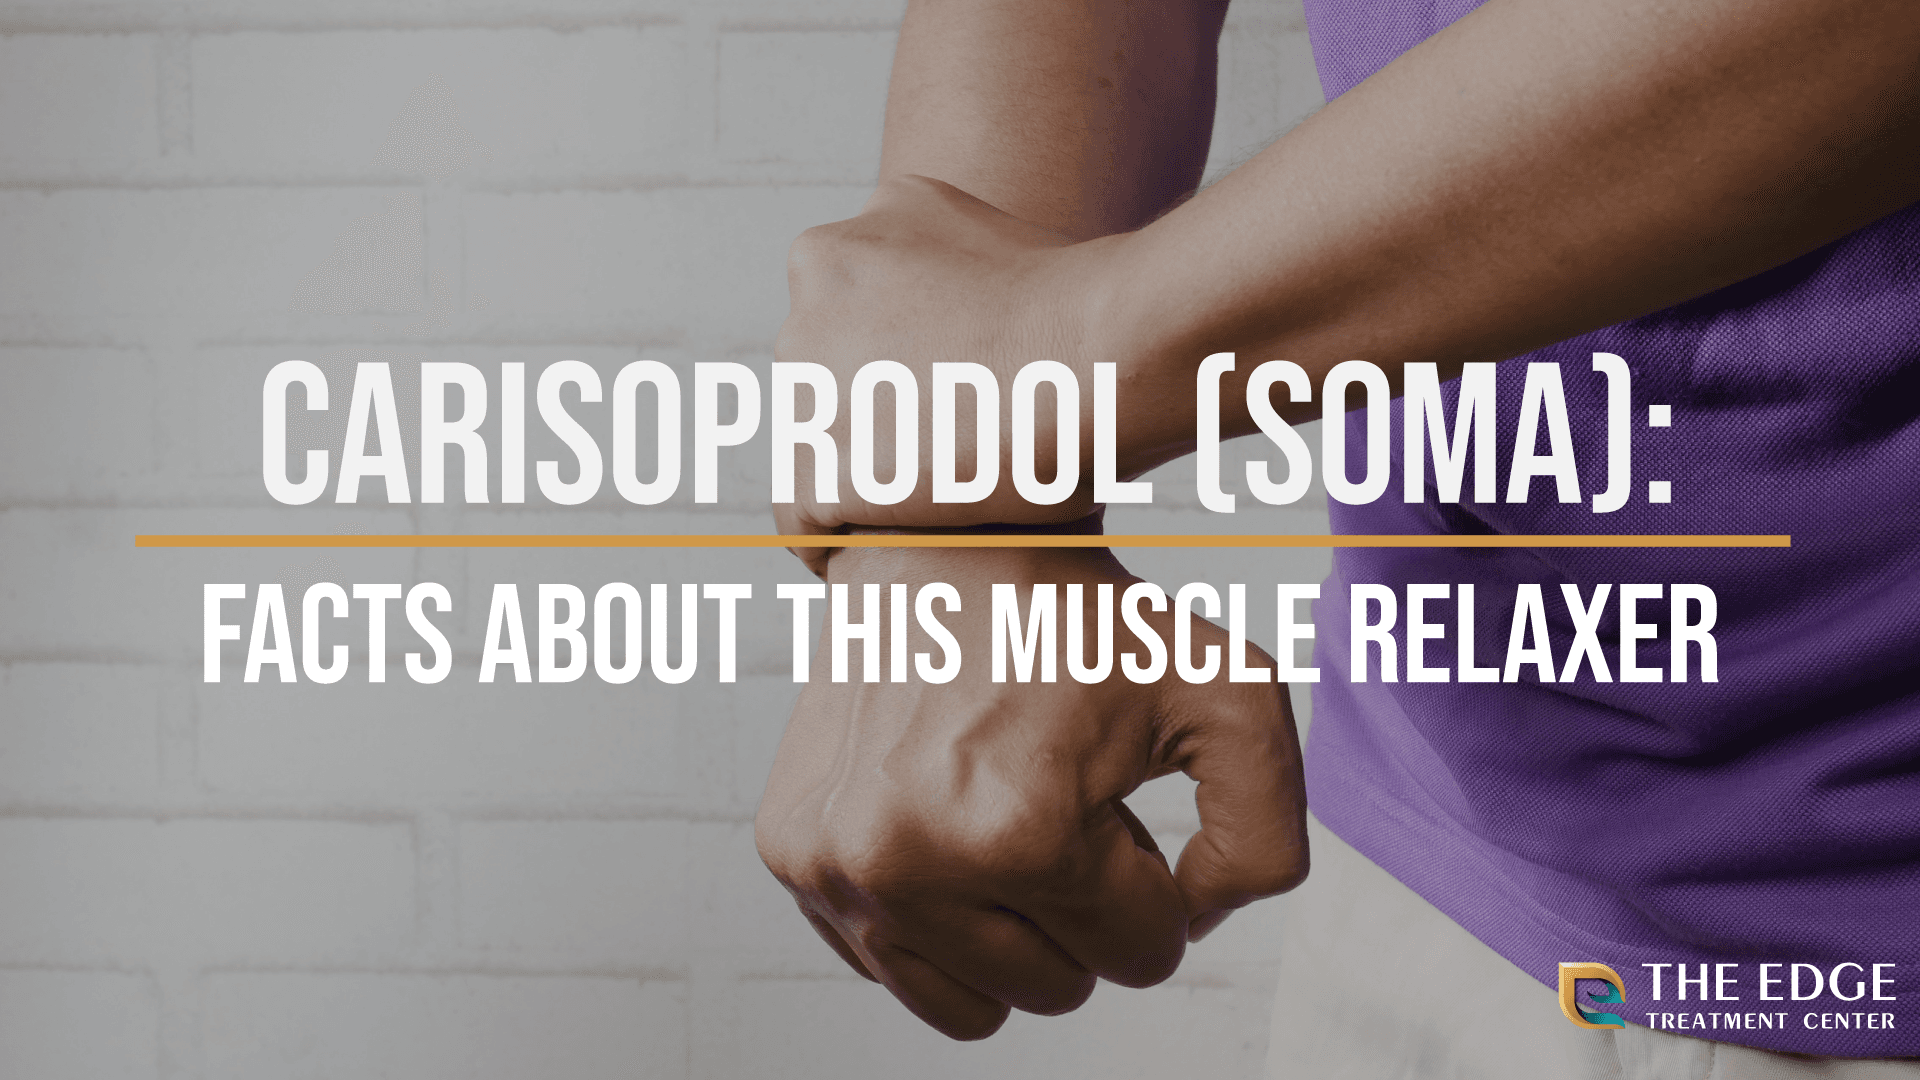 What is Carisoprodol (Soma)?